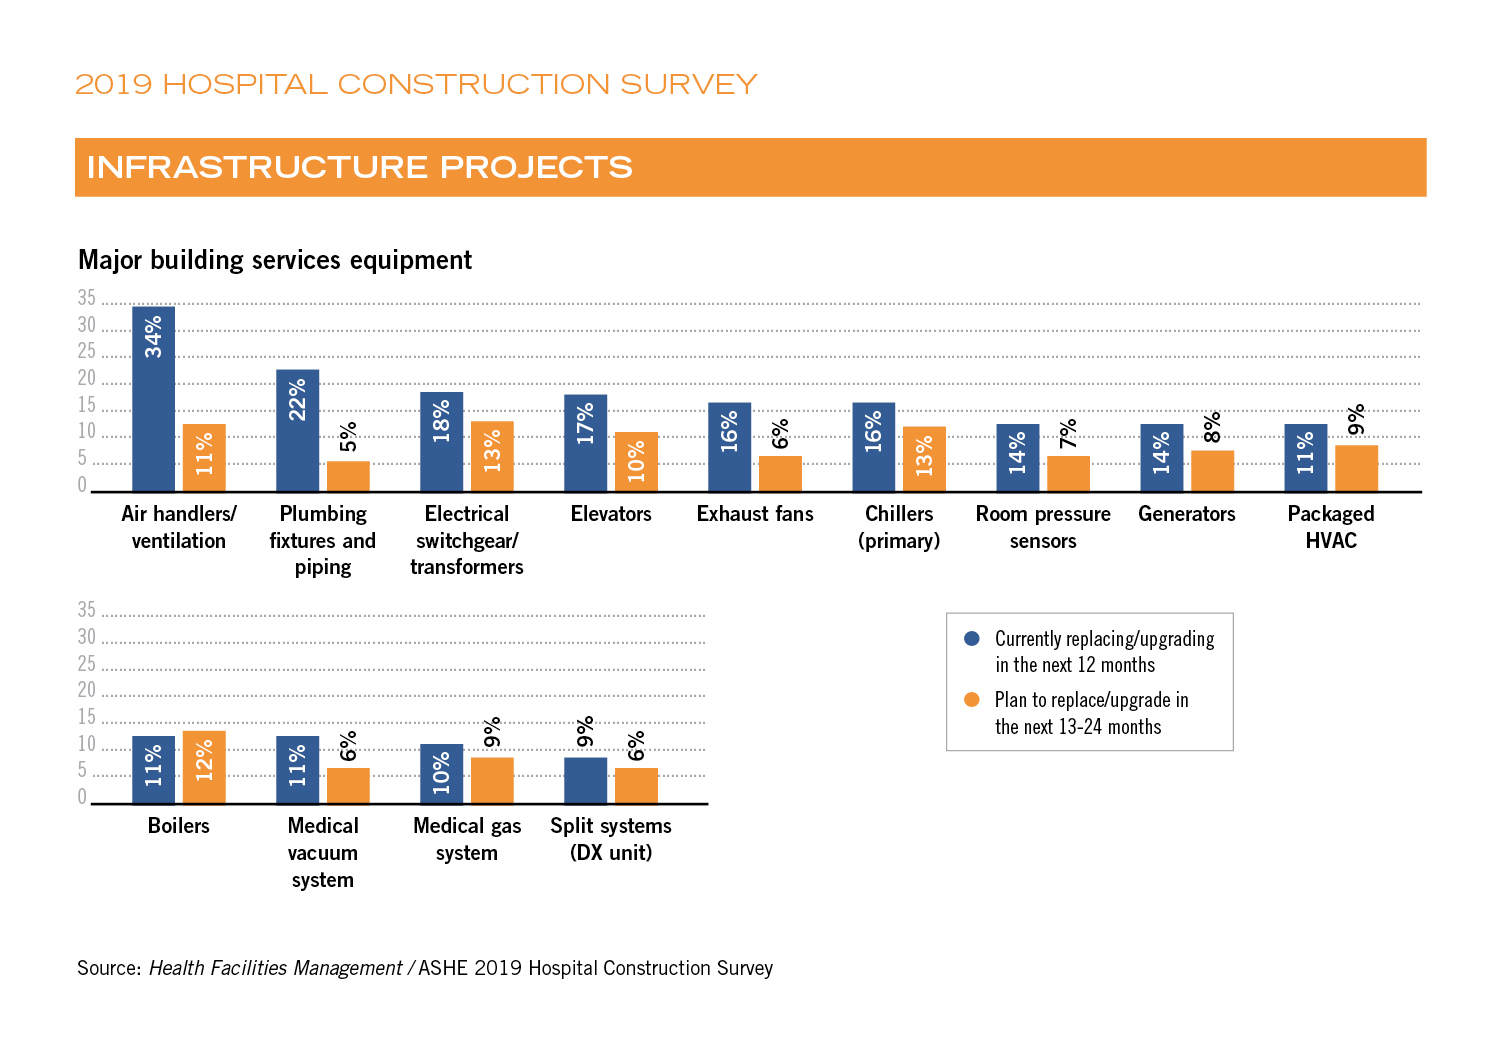 2019 Hospital Construction Survey Health Facilities Management